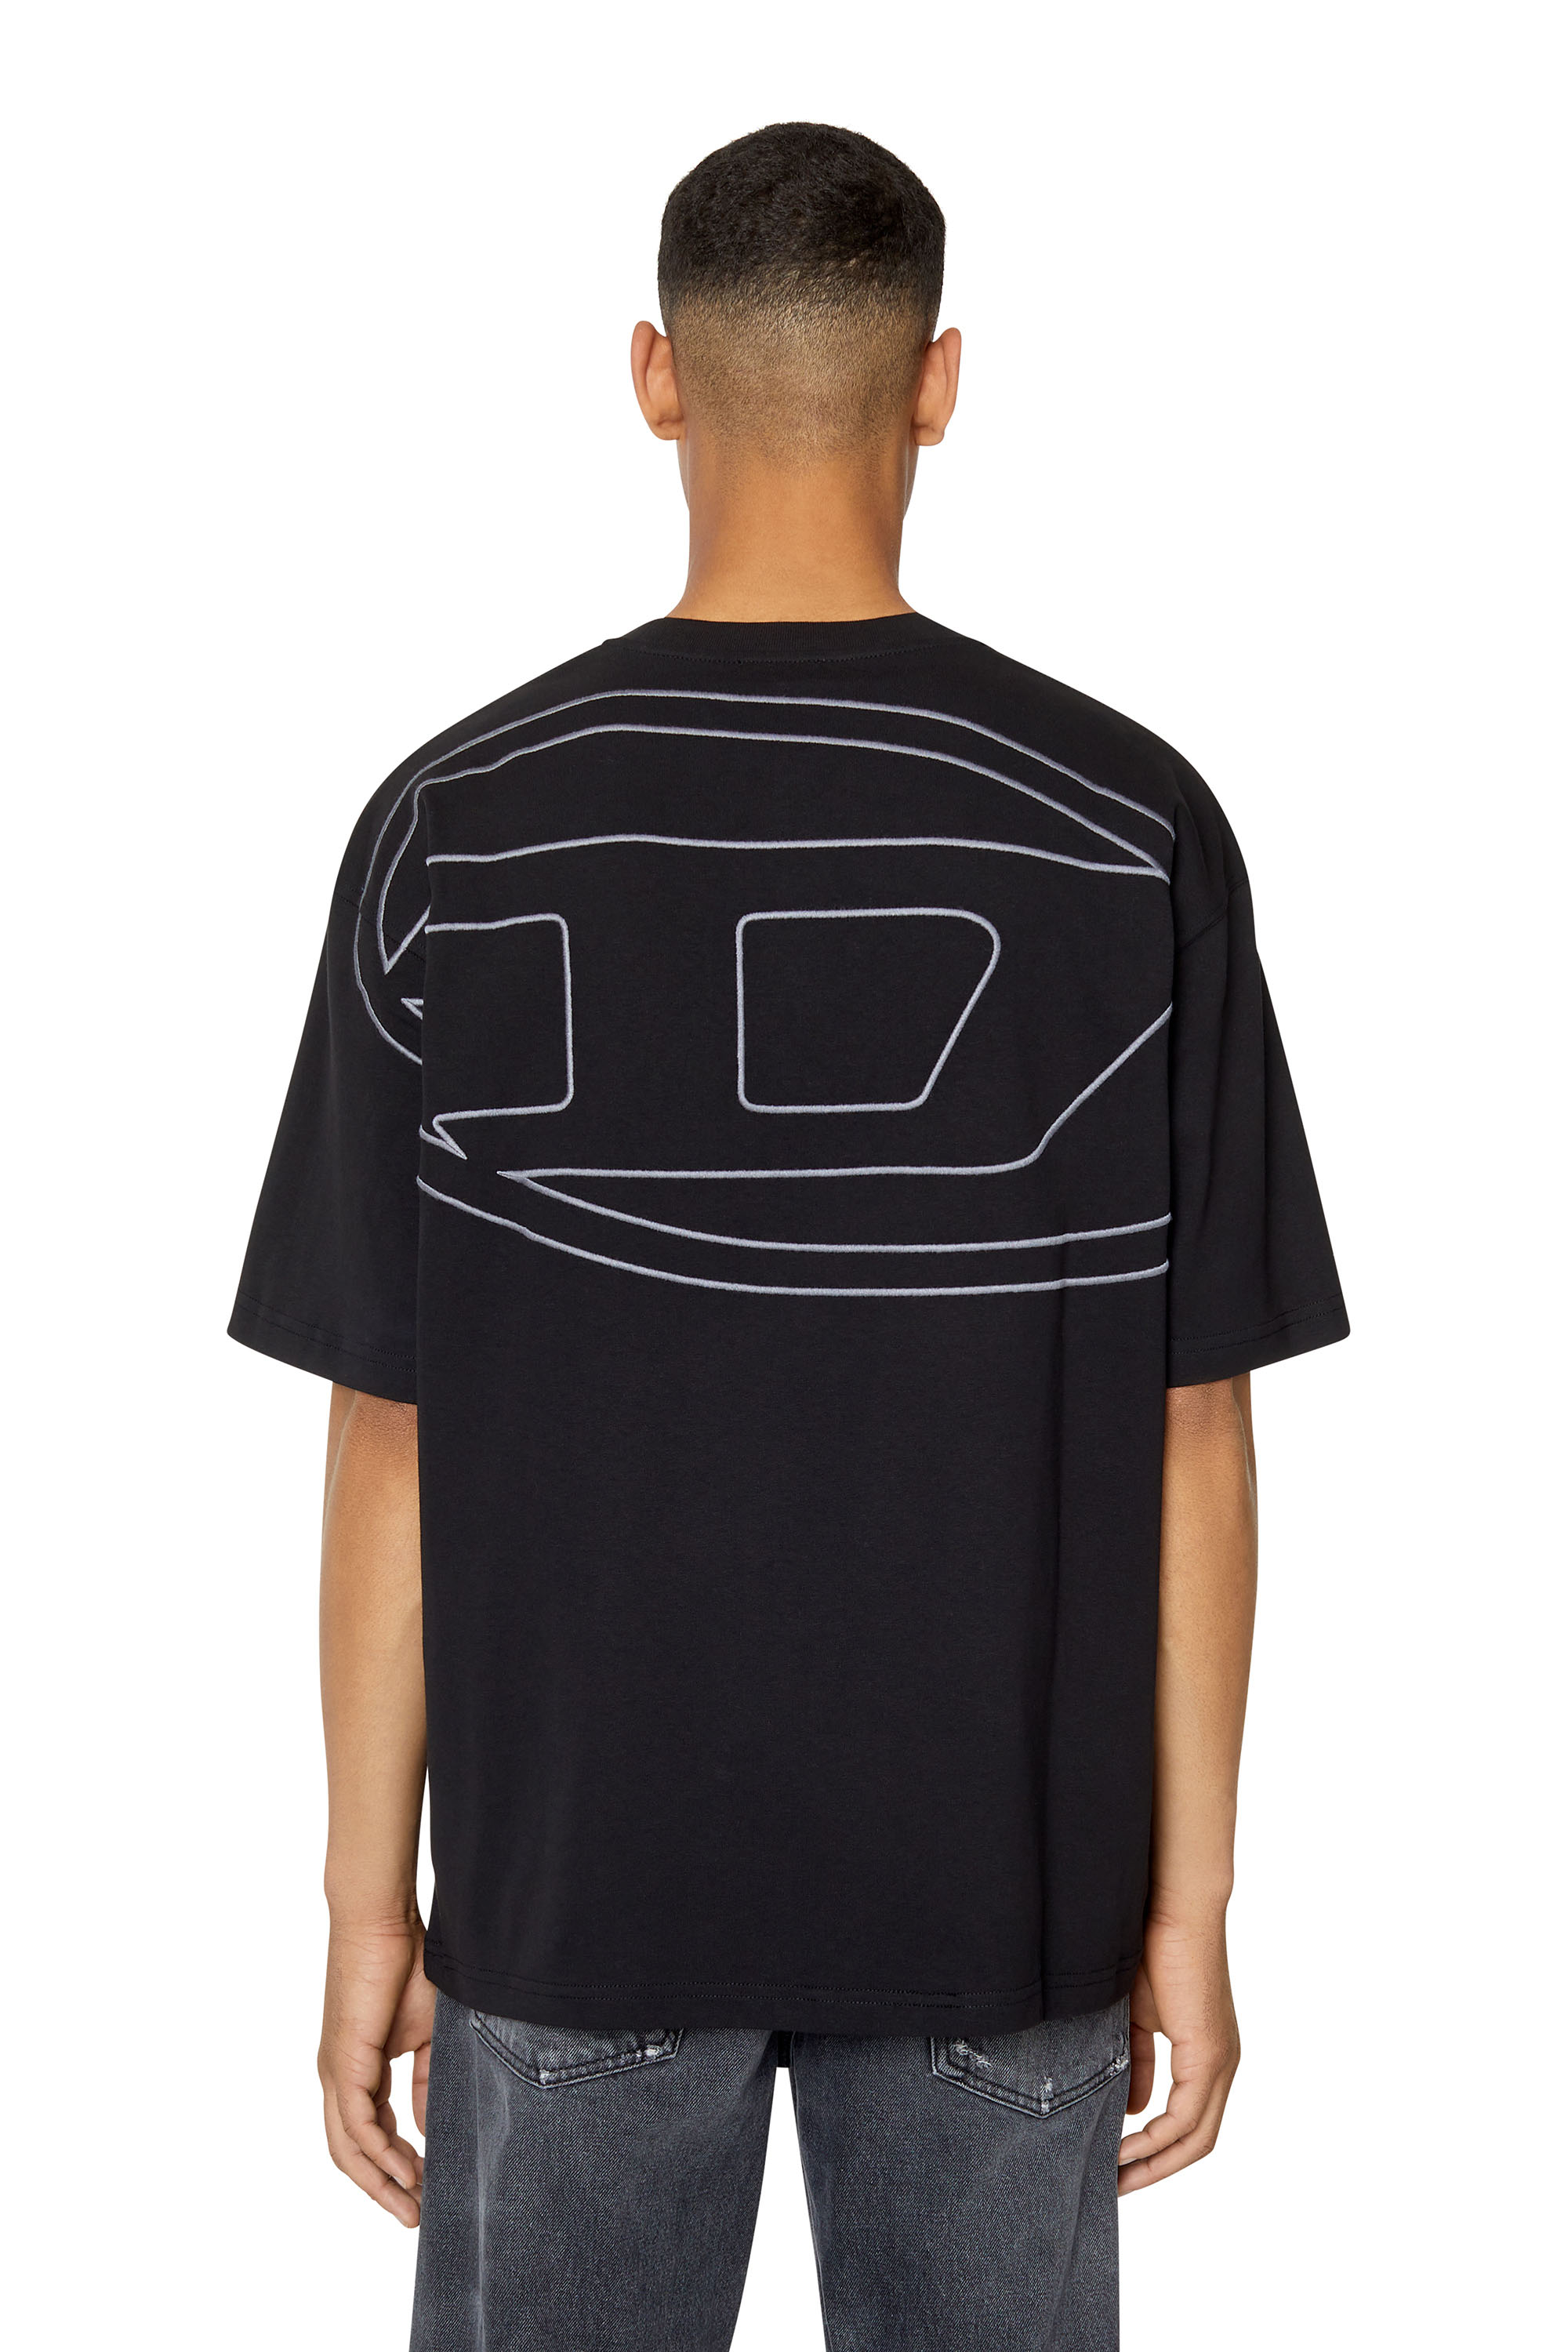 Diesel Black Logo T-shirt